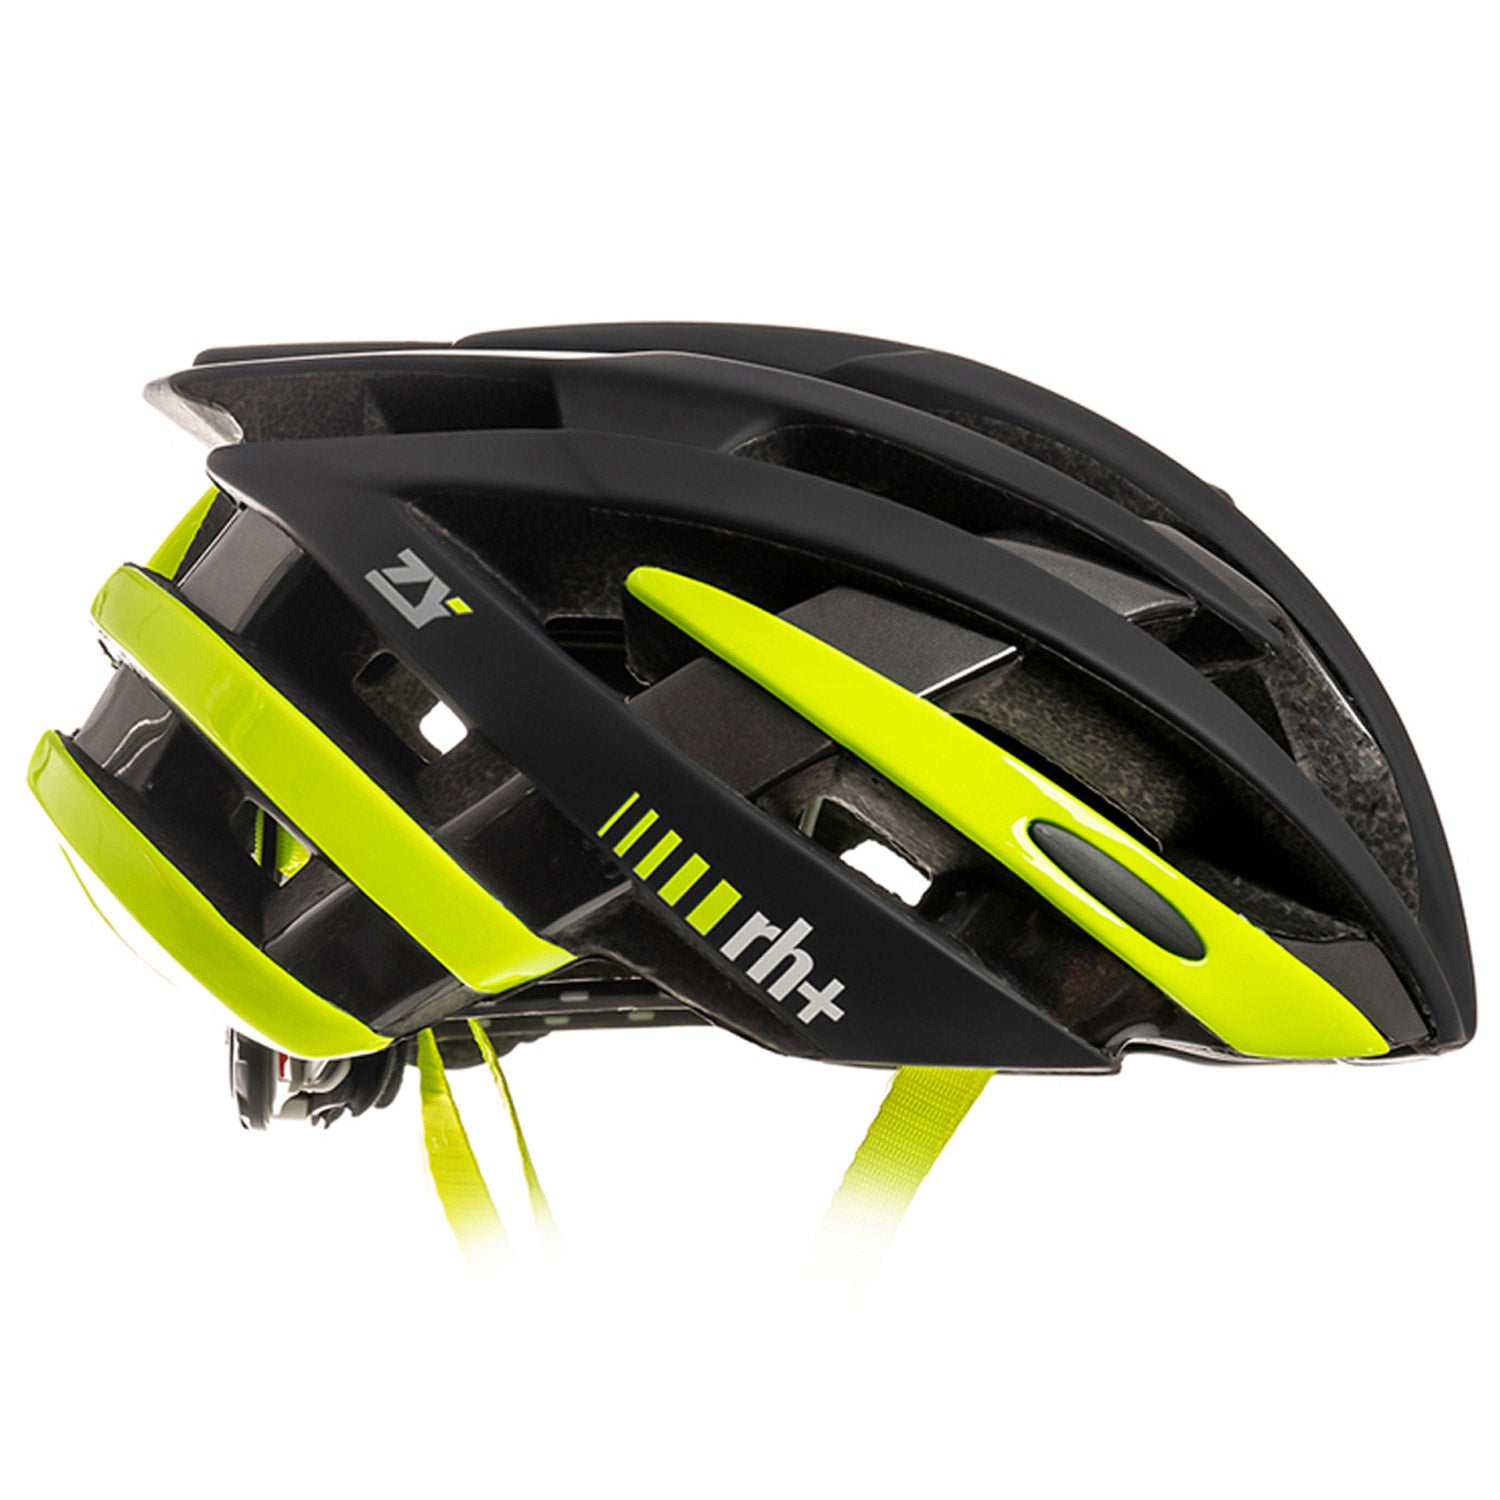 Rh+ ZY Helmet - Black yellow